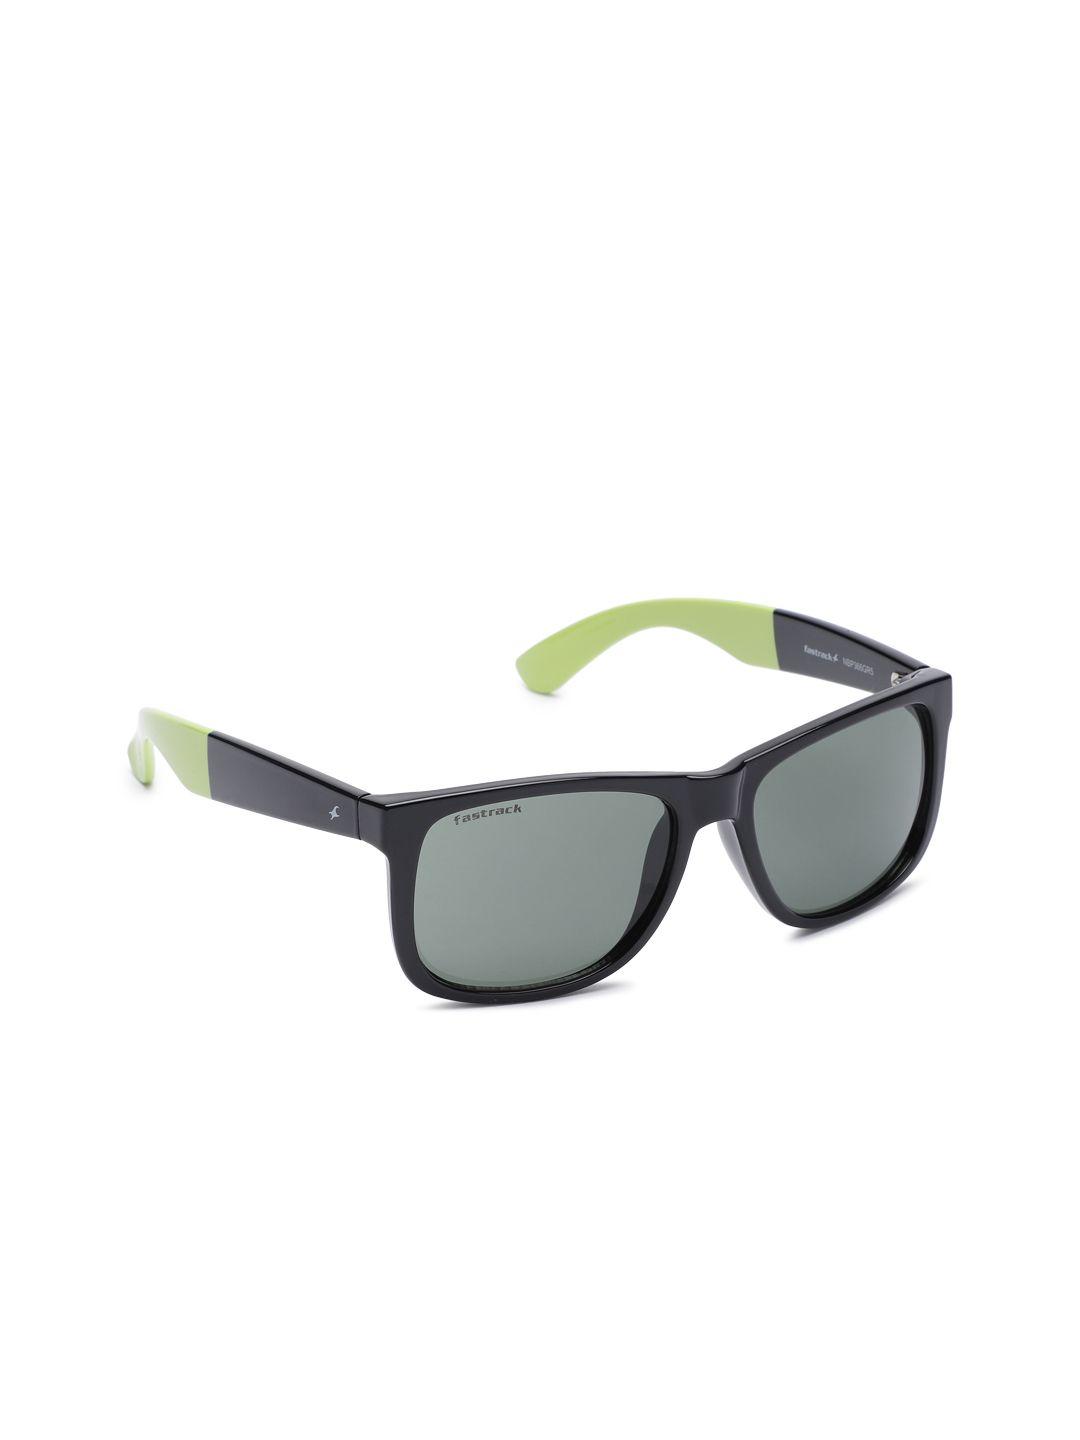 fastrack-men-square-sunglasses-p366gr